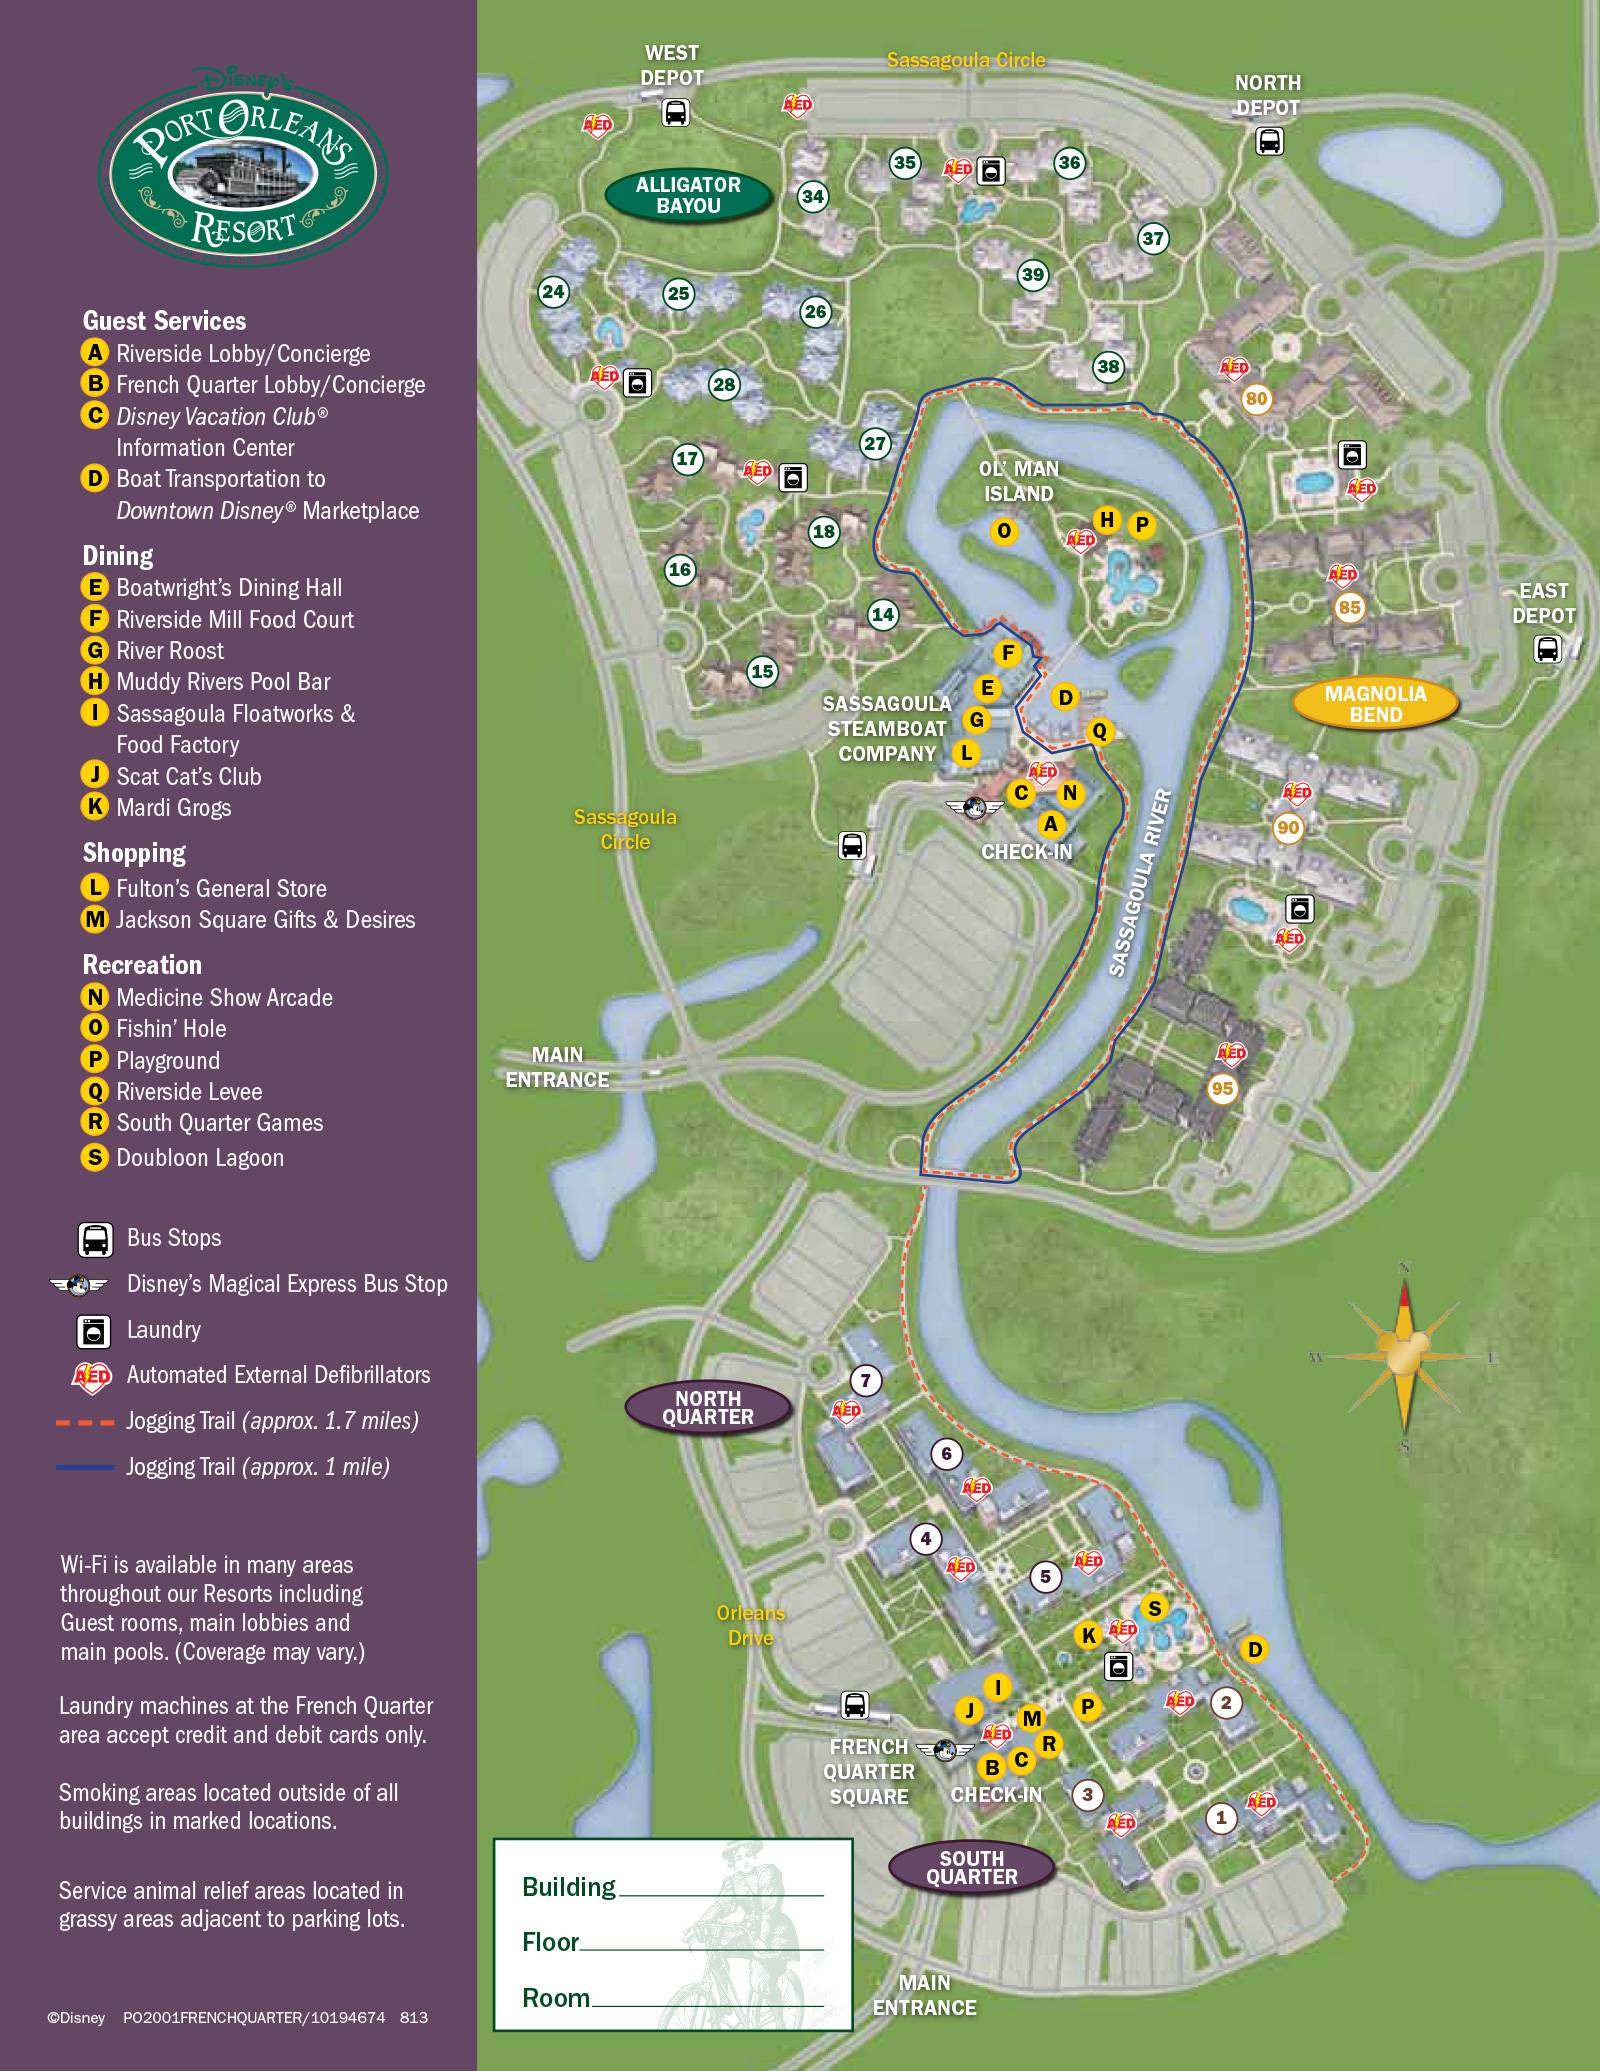 New 2013 Port Orleans Resort map - French Quarter